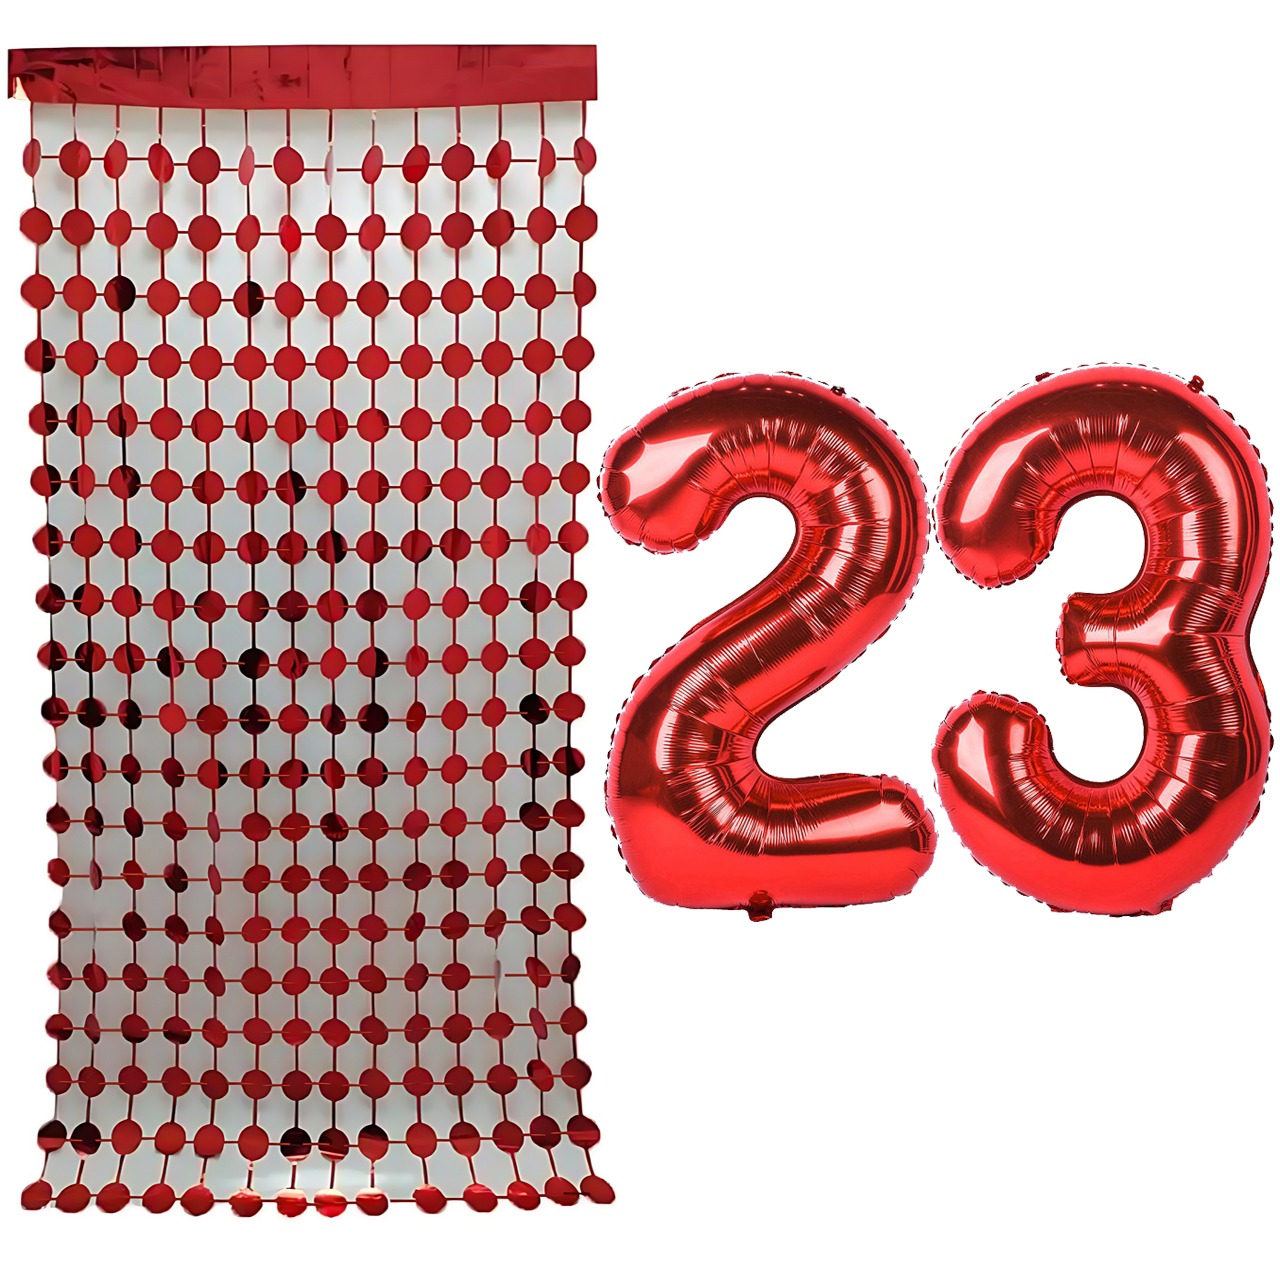 بادکنک فویلی مستر تم طرح عدد 23 به همراه ریسه تزئینی بسته 3 عددی